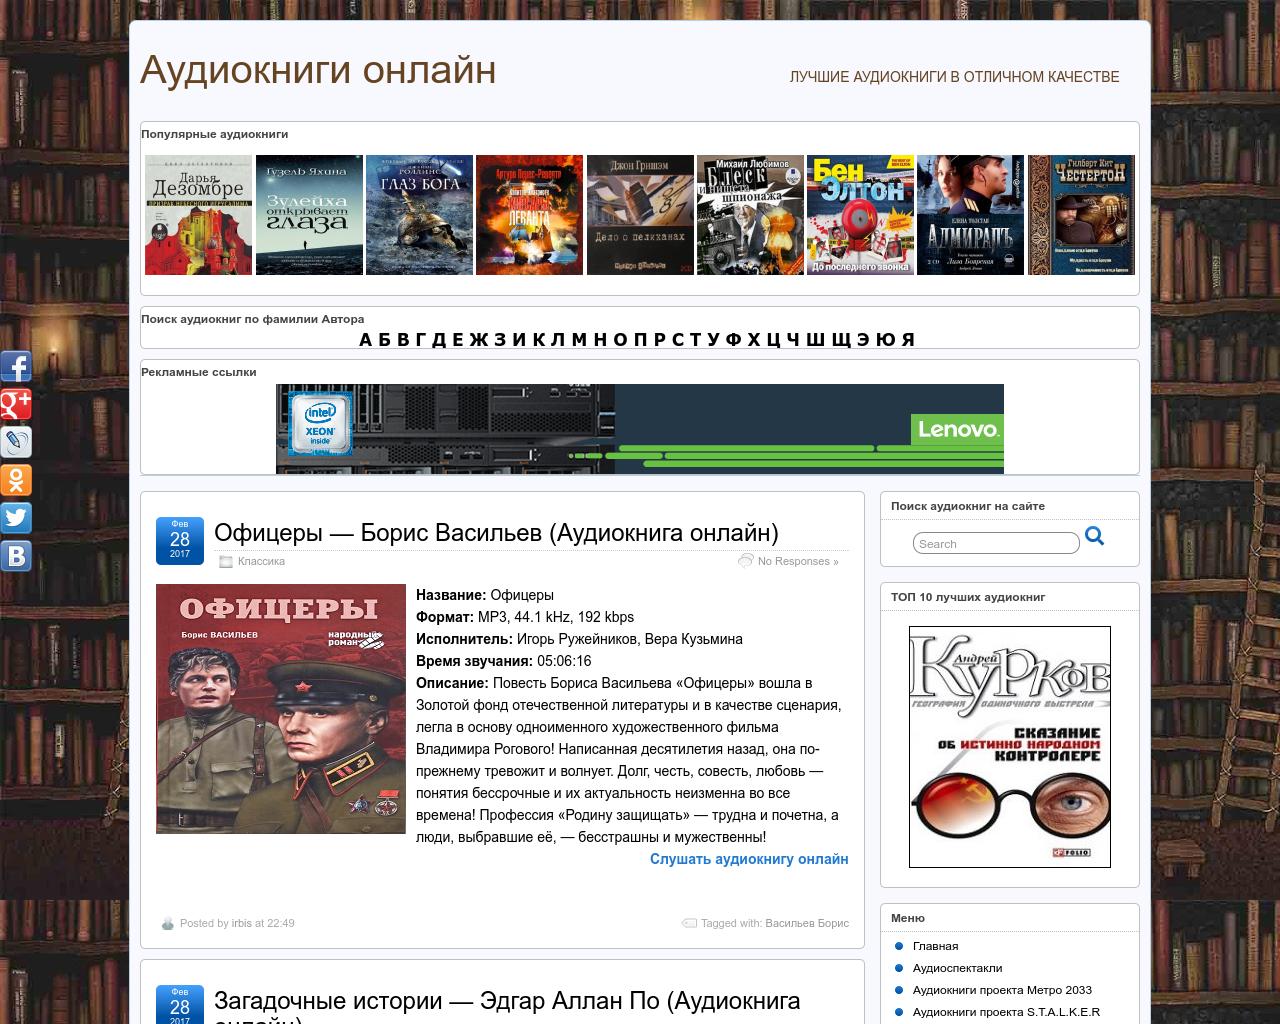 Изображение сайта bookzvuk.ru в разрешении 1280x1024